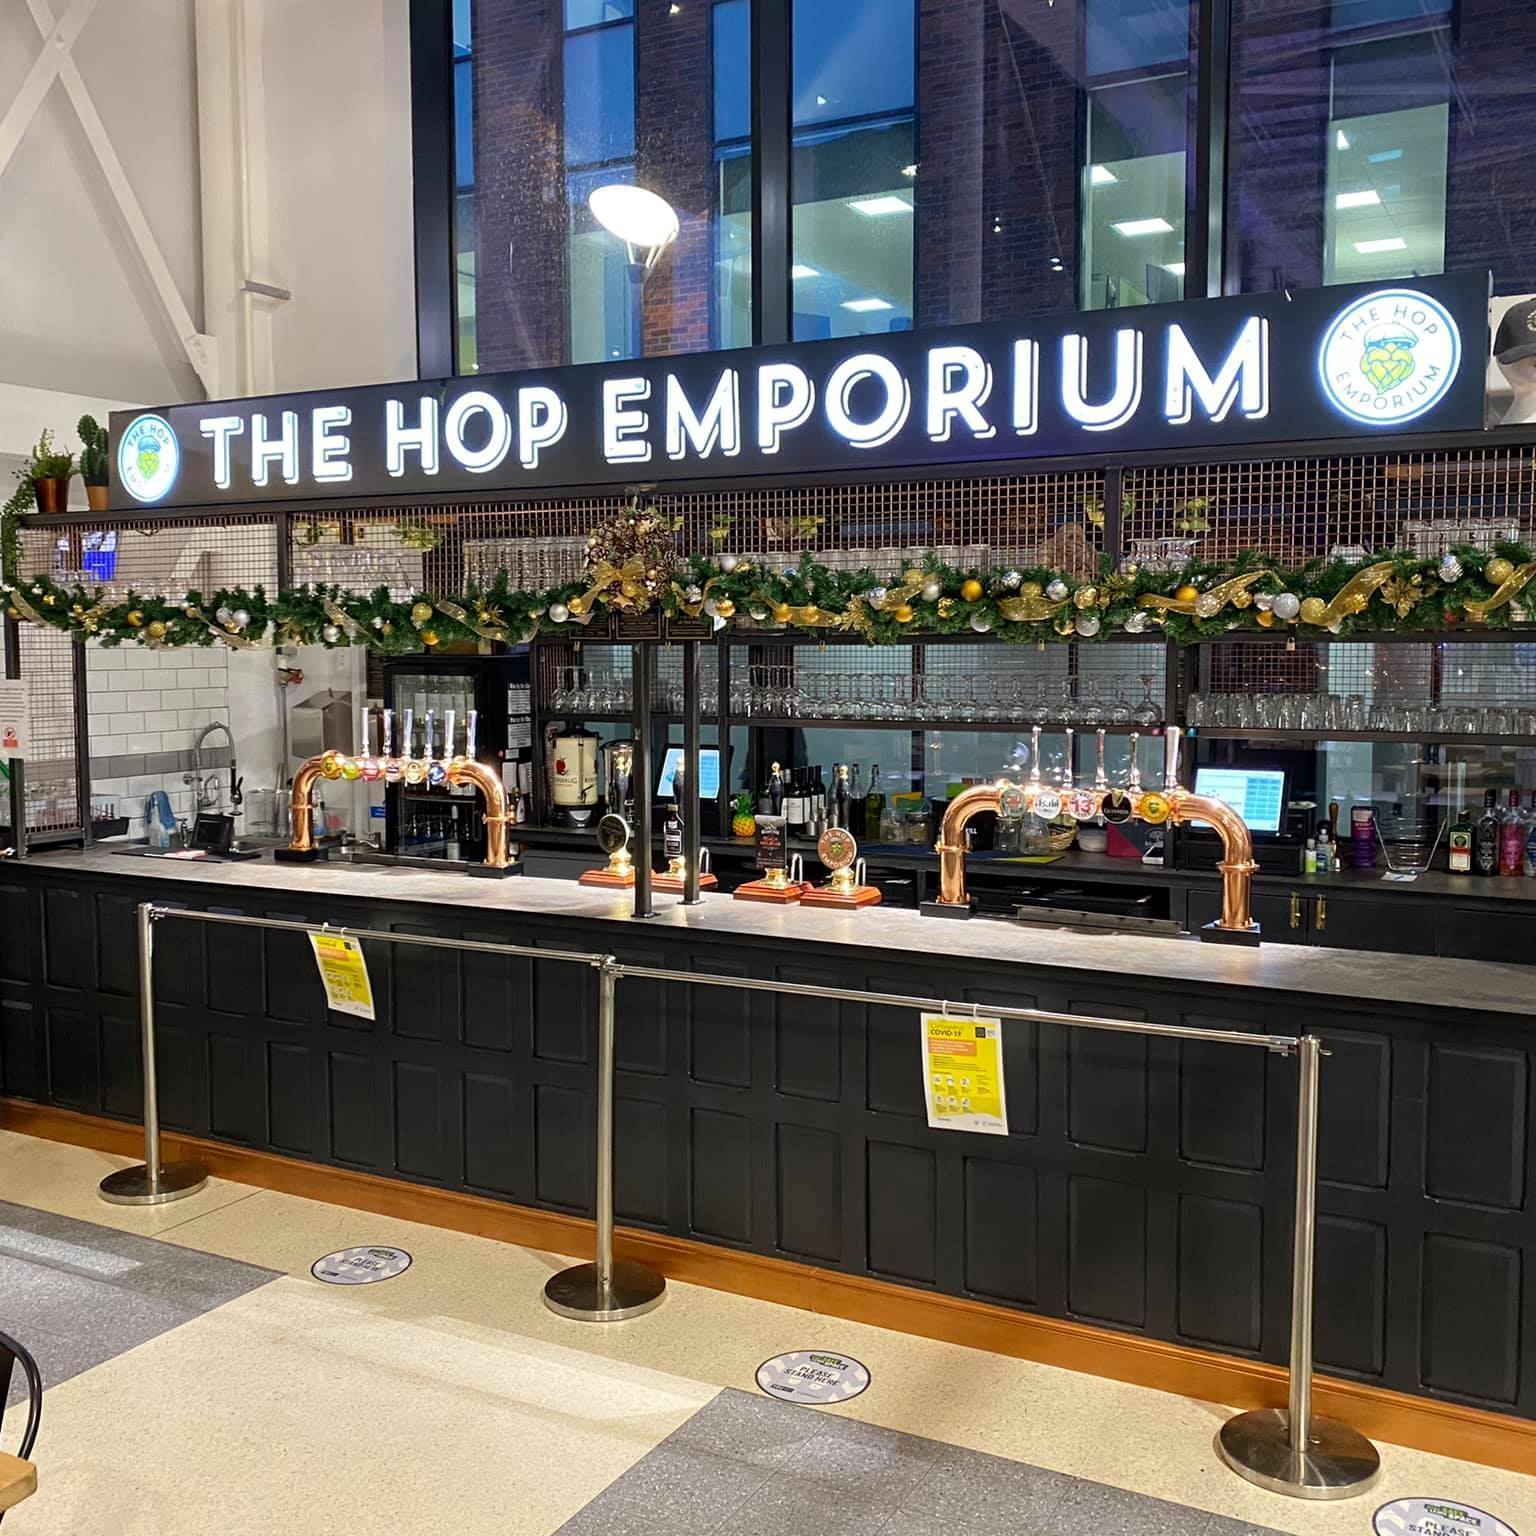 The Hop Emporium